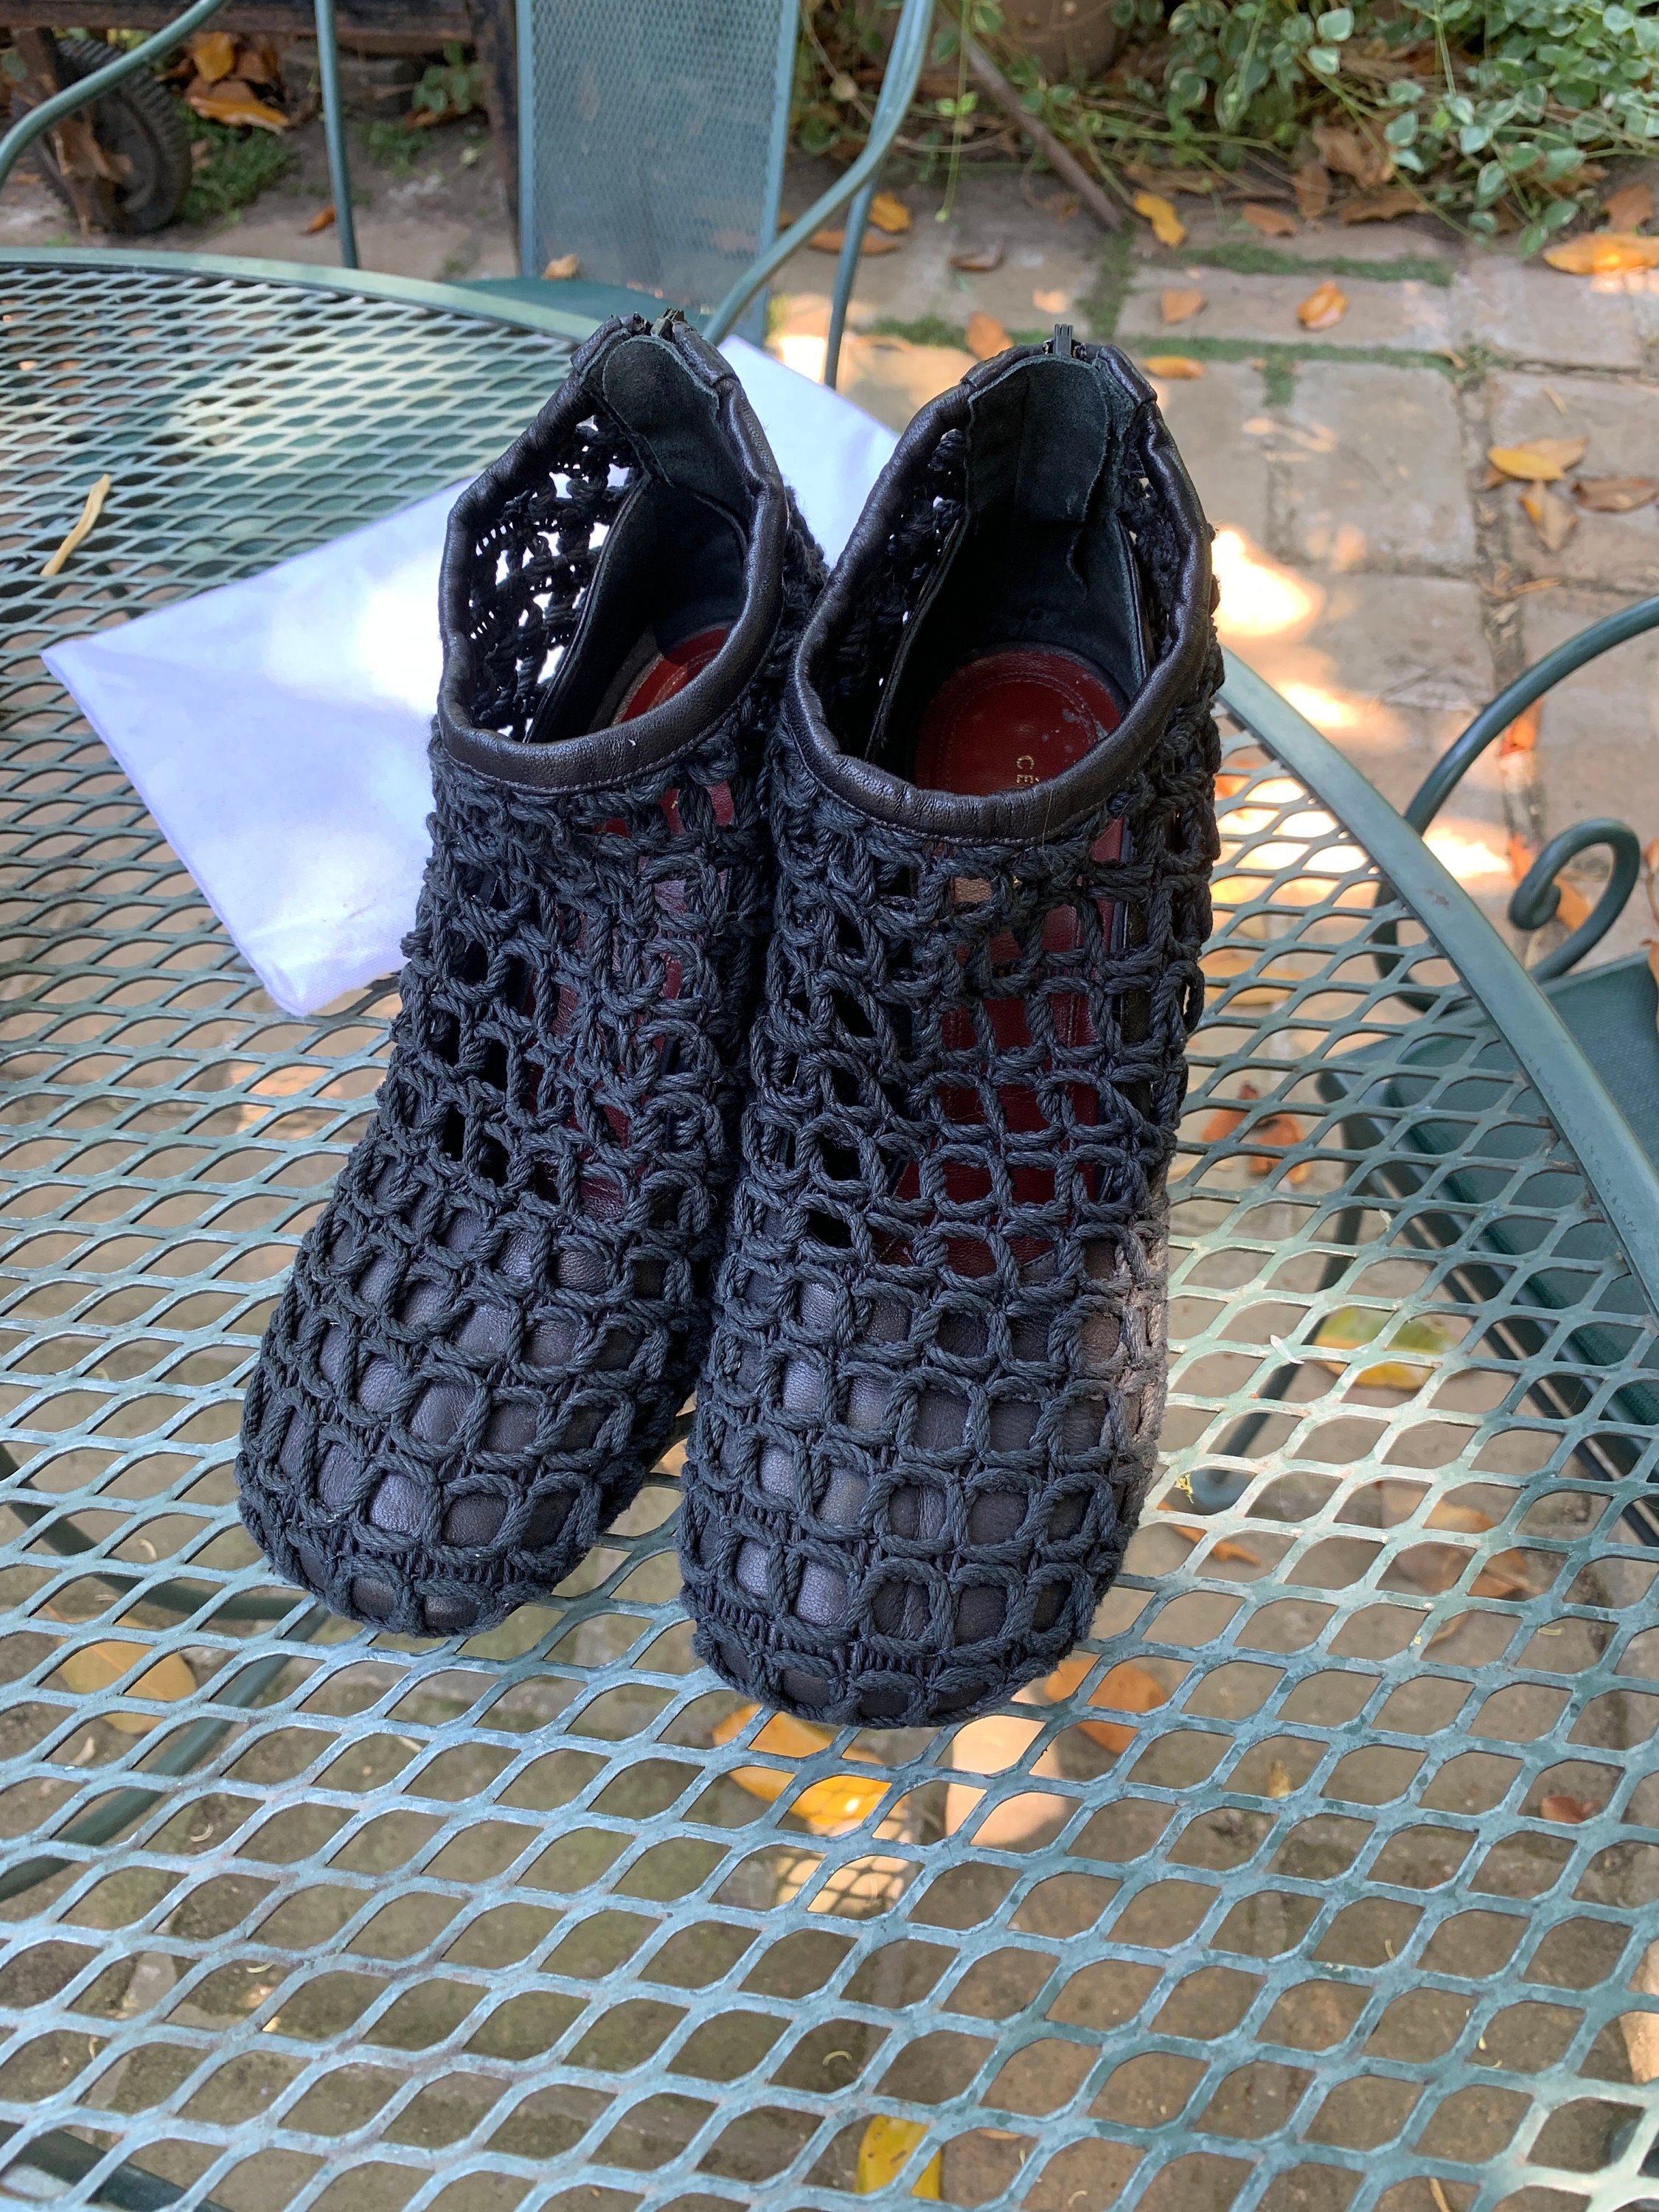 Céline Black Glove Mesh Heels Boots 36 -  Denmark